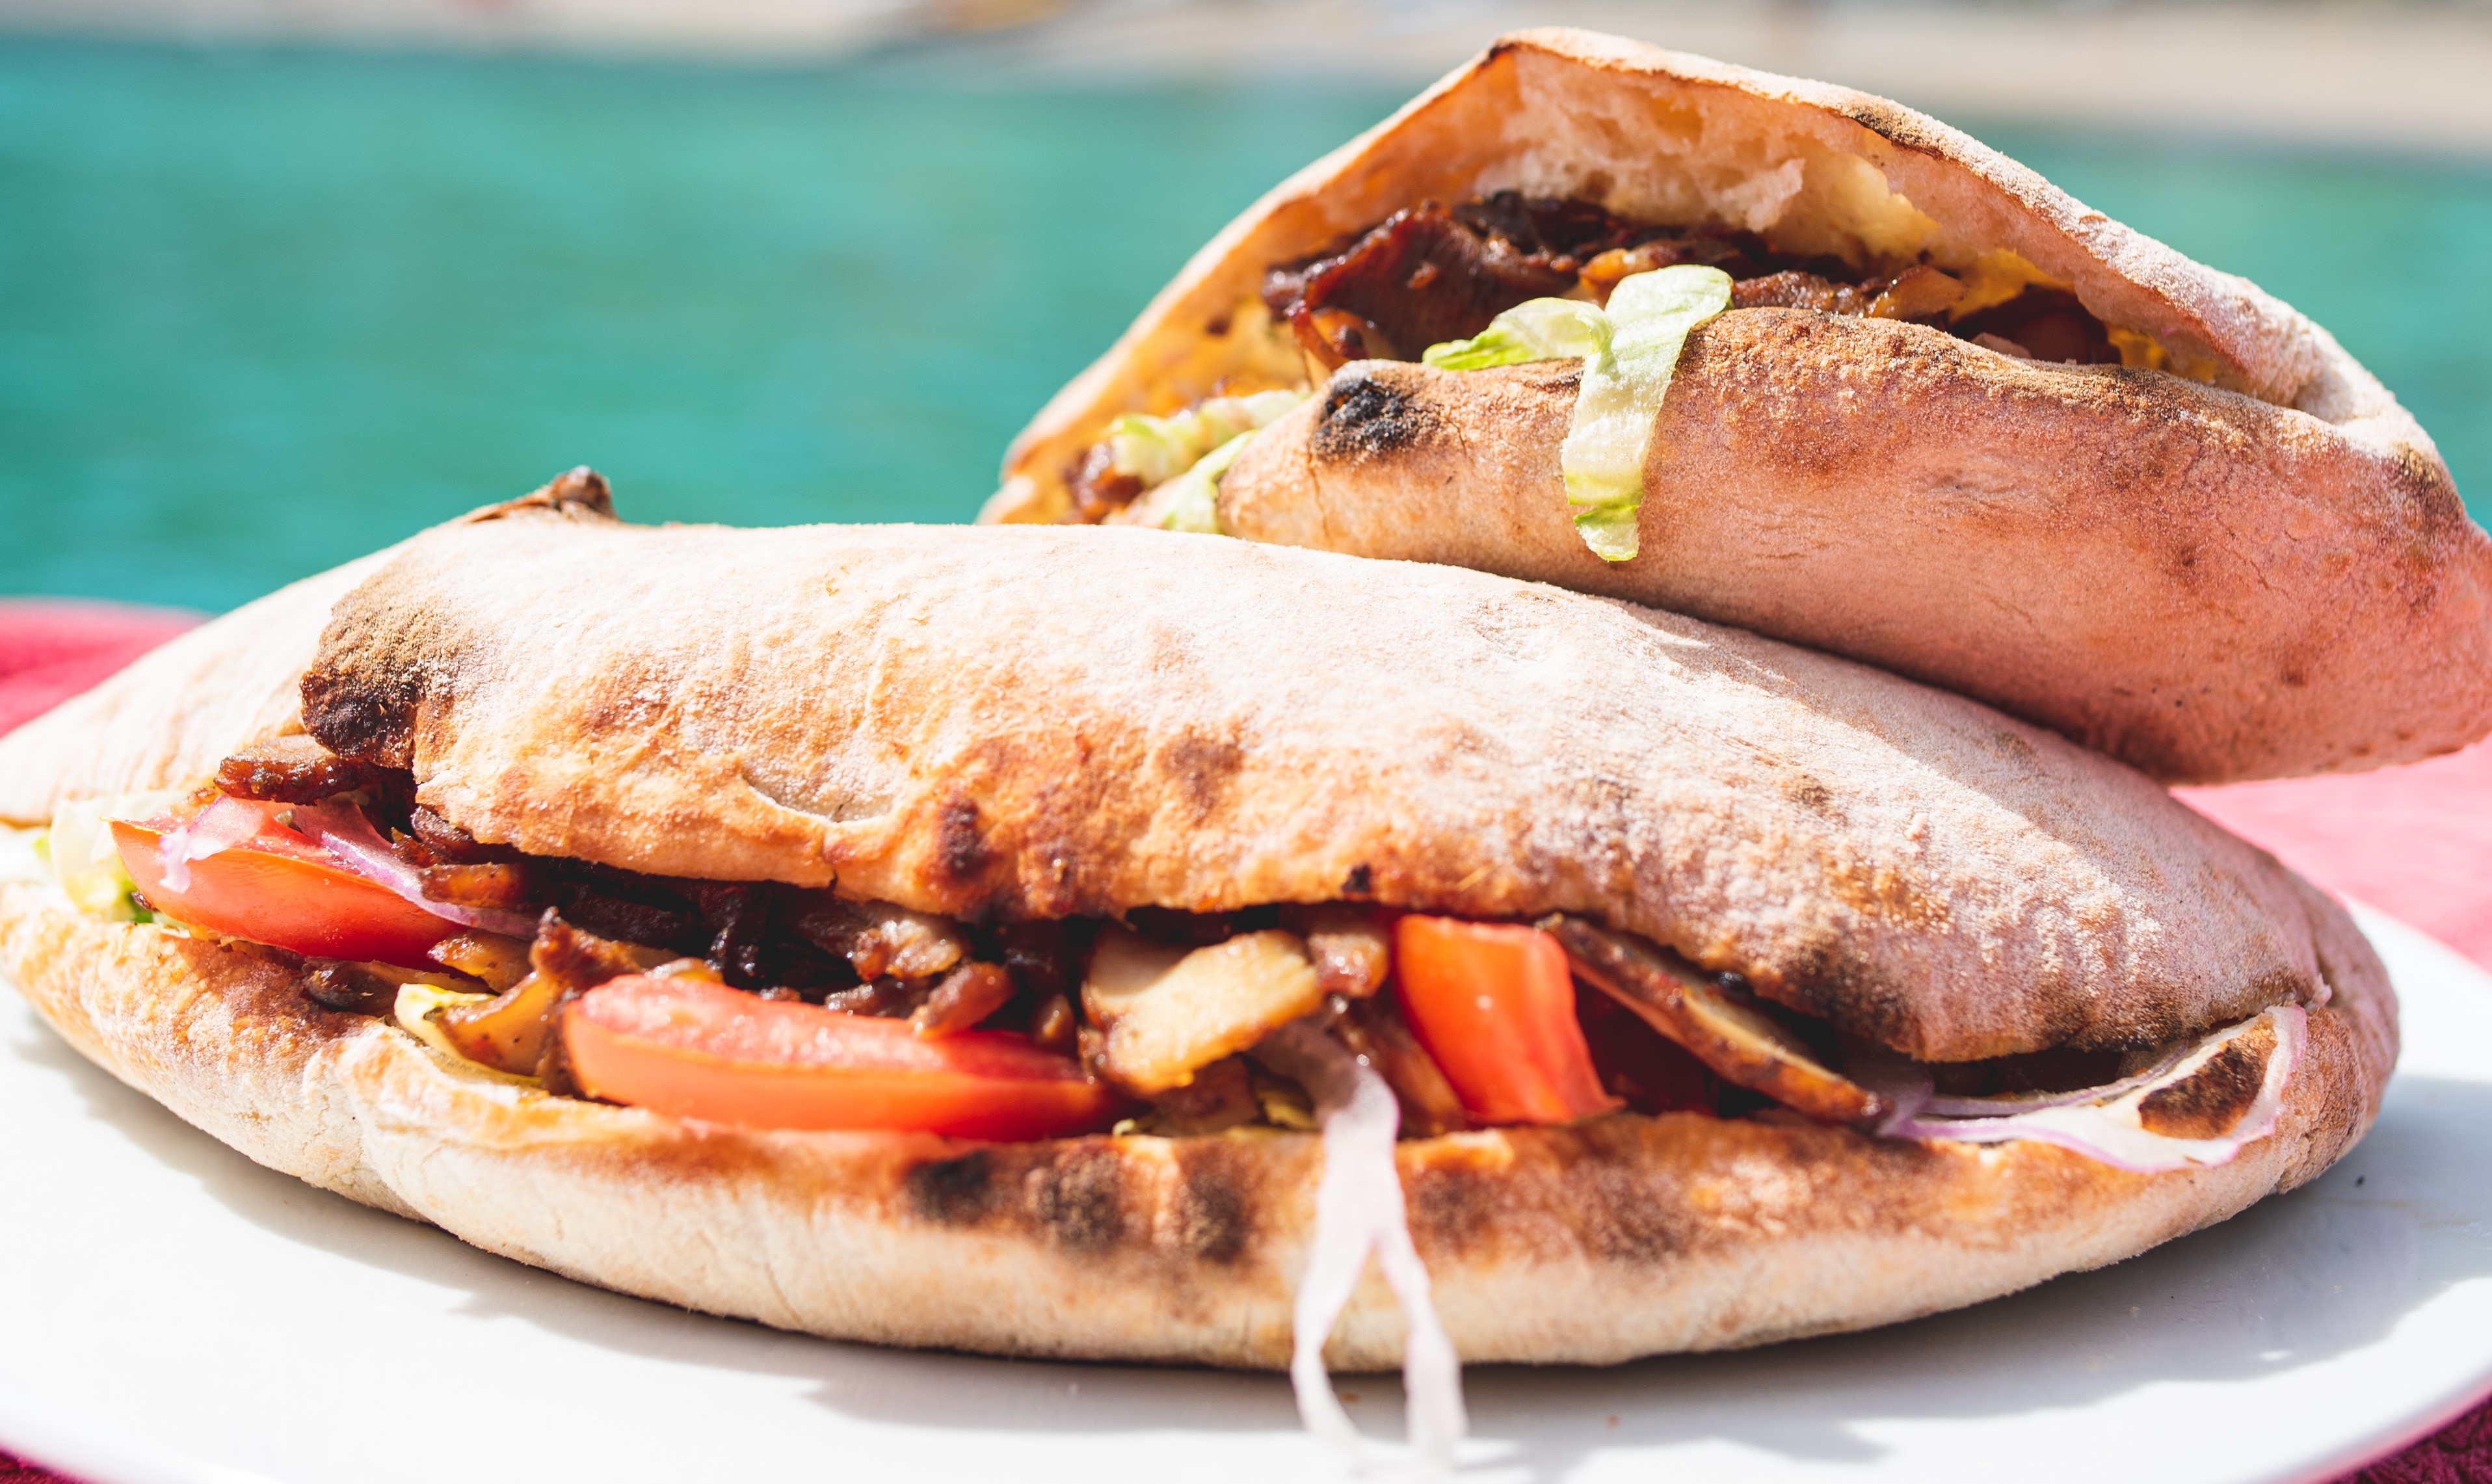 Menu Homemade Sandwich with Meat Shawarma Kebab